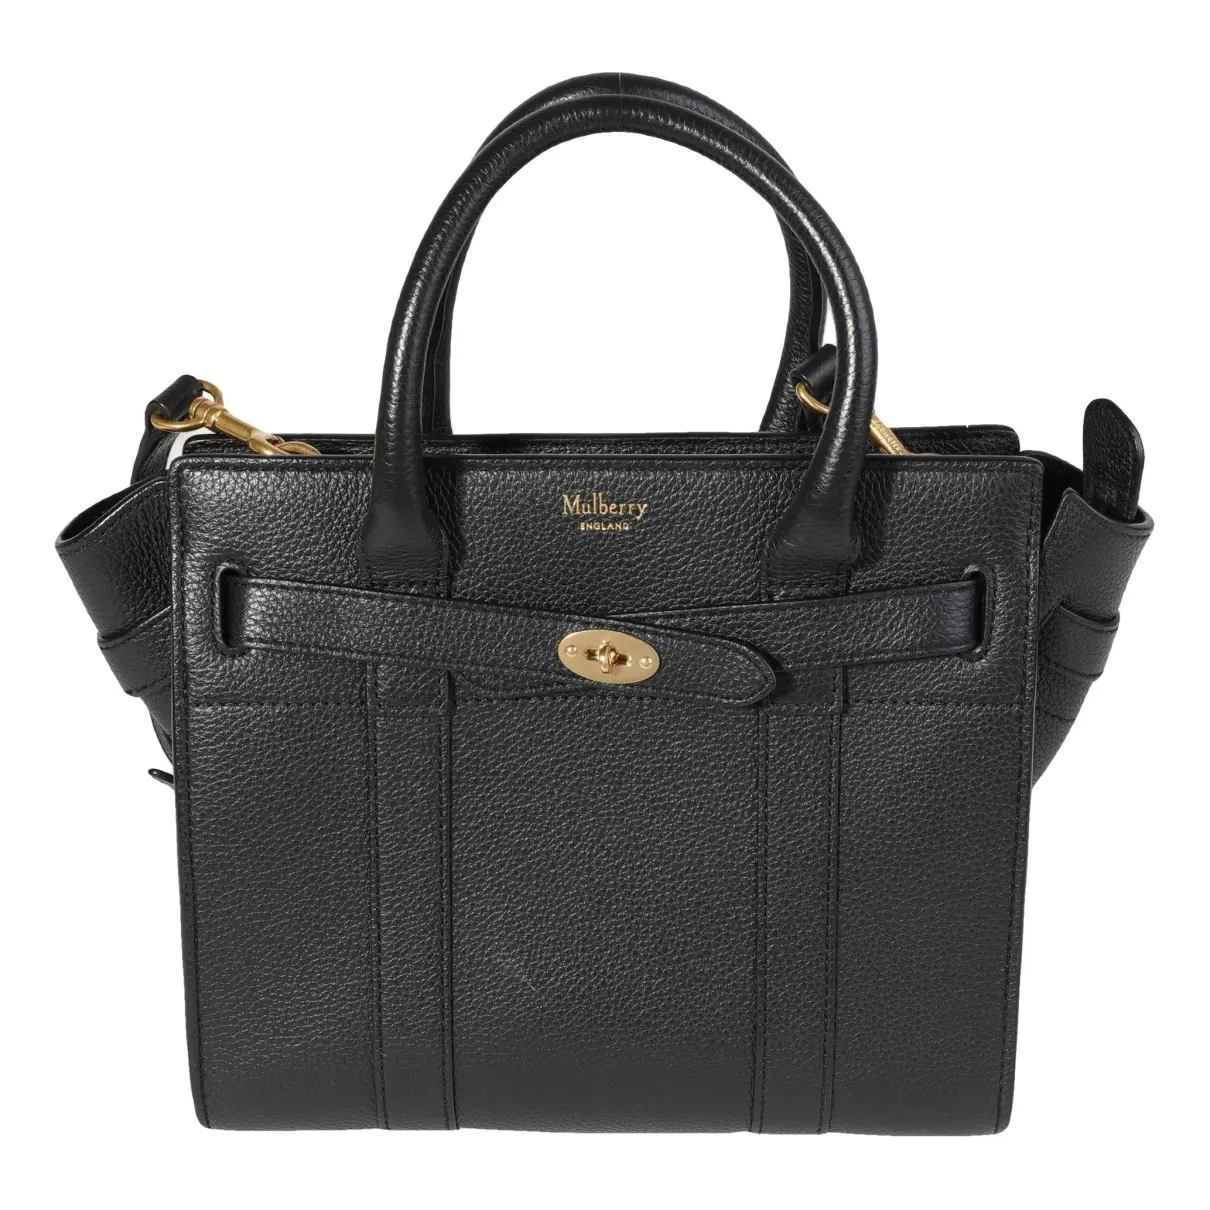 Bayswater tote leather handbag